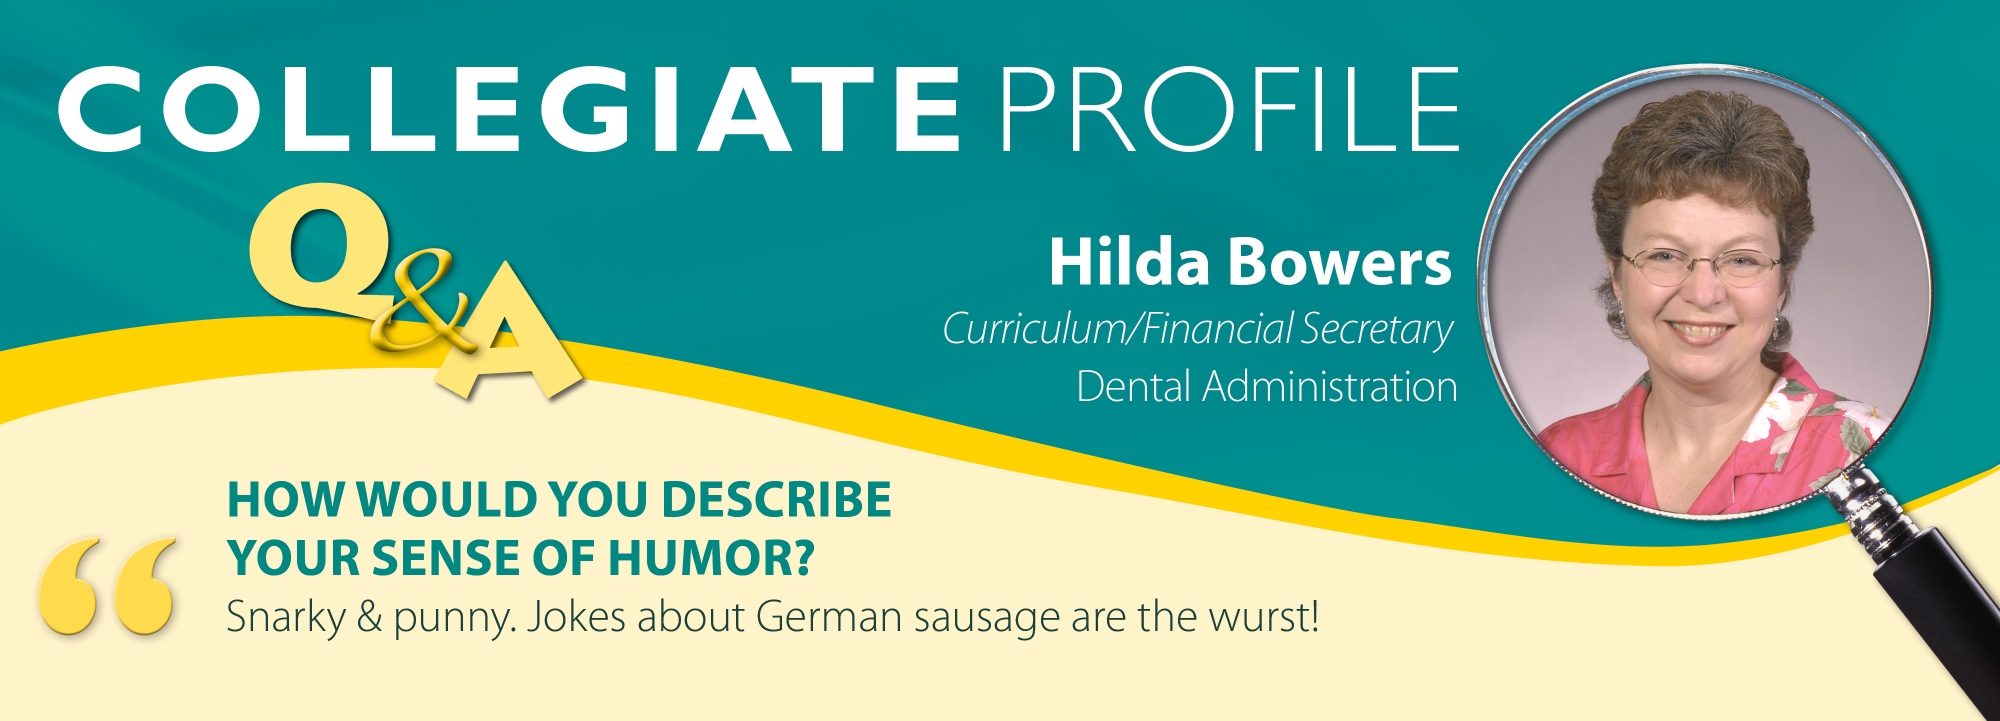 Hilda Bowers June collegiate profile